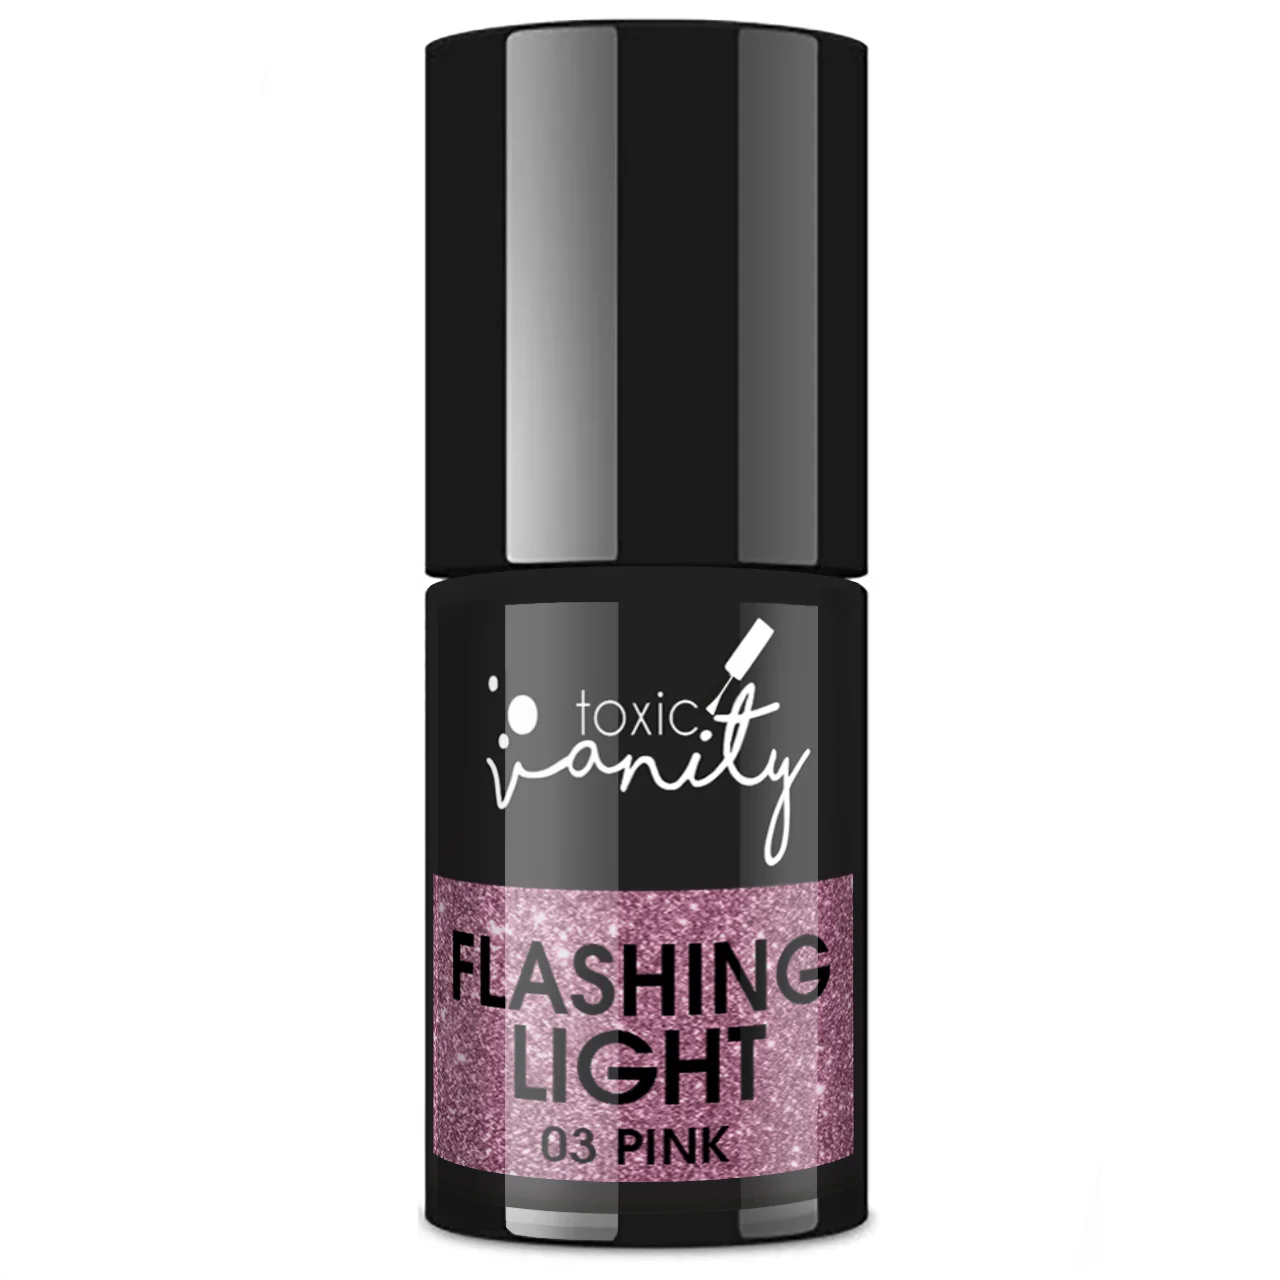 Esmalte reflectante Flashing Light - 03 Pink 2